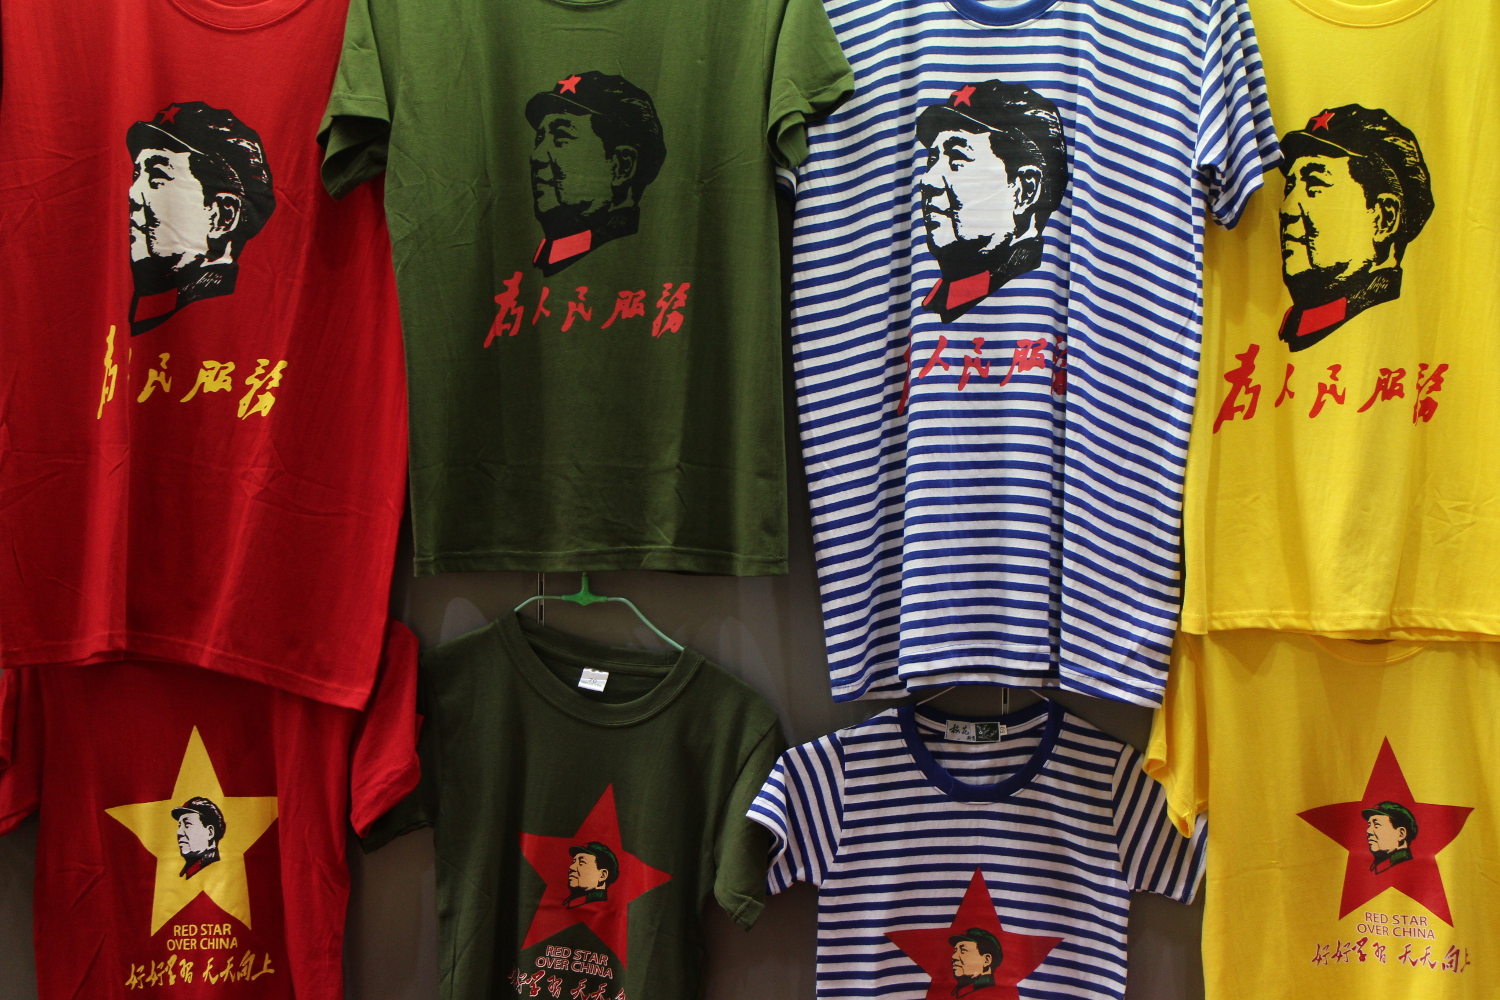 Mao tat: t-shirts mark China's nostalgia for all things red. Image by Thomas Bird / londoninfopage